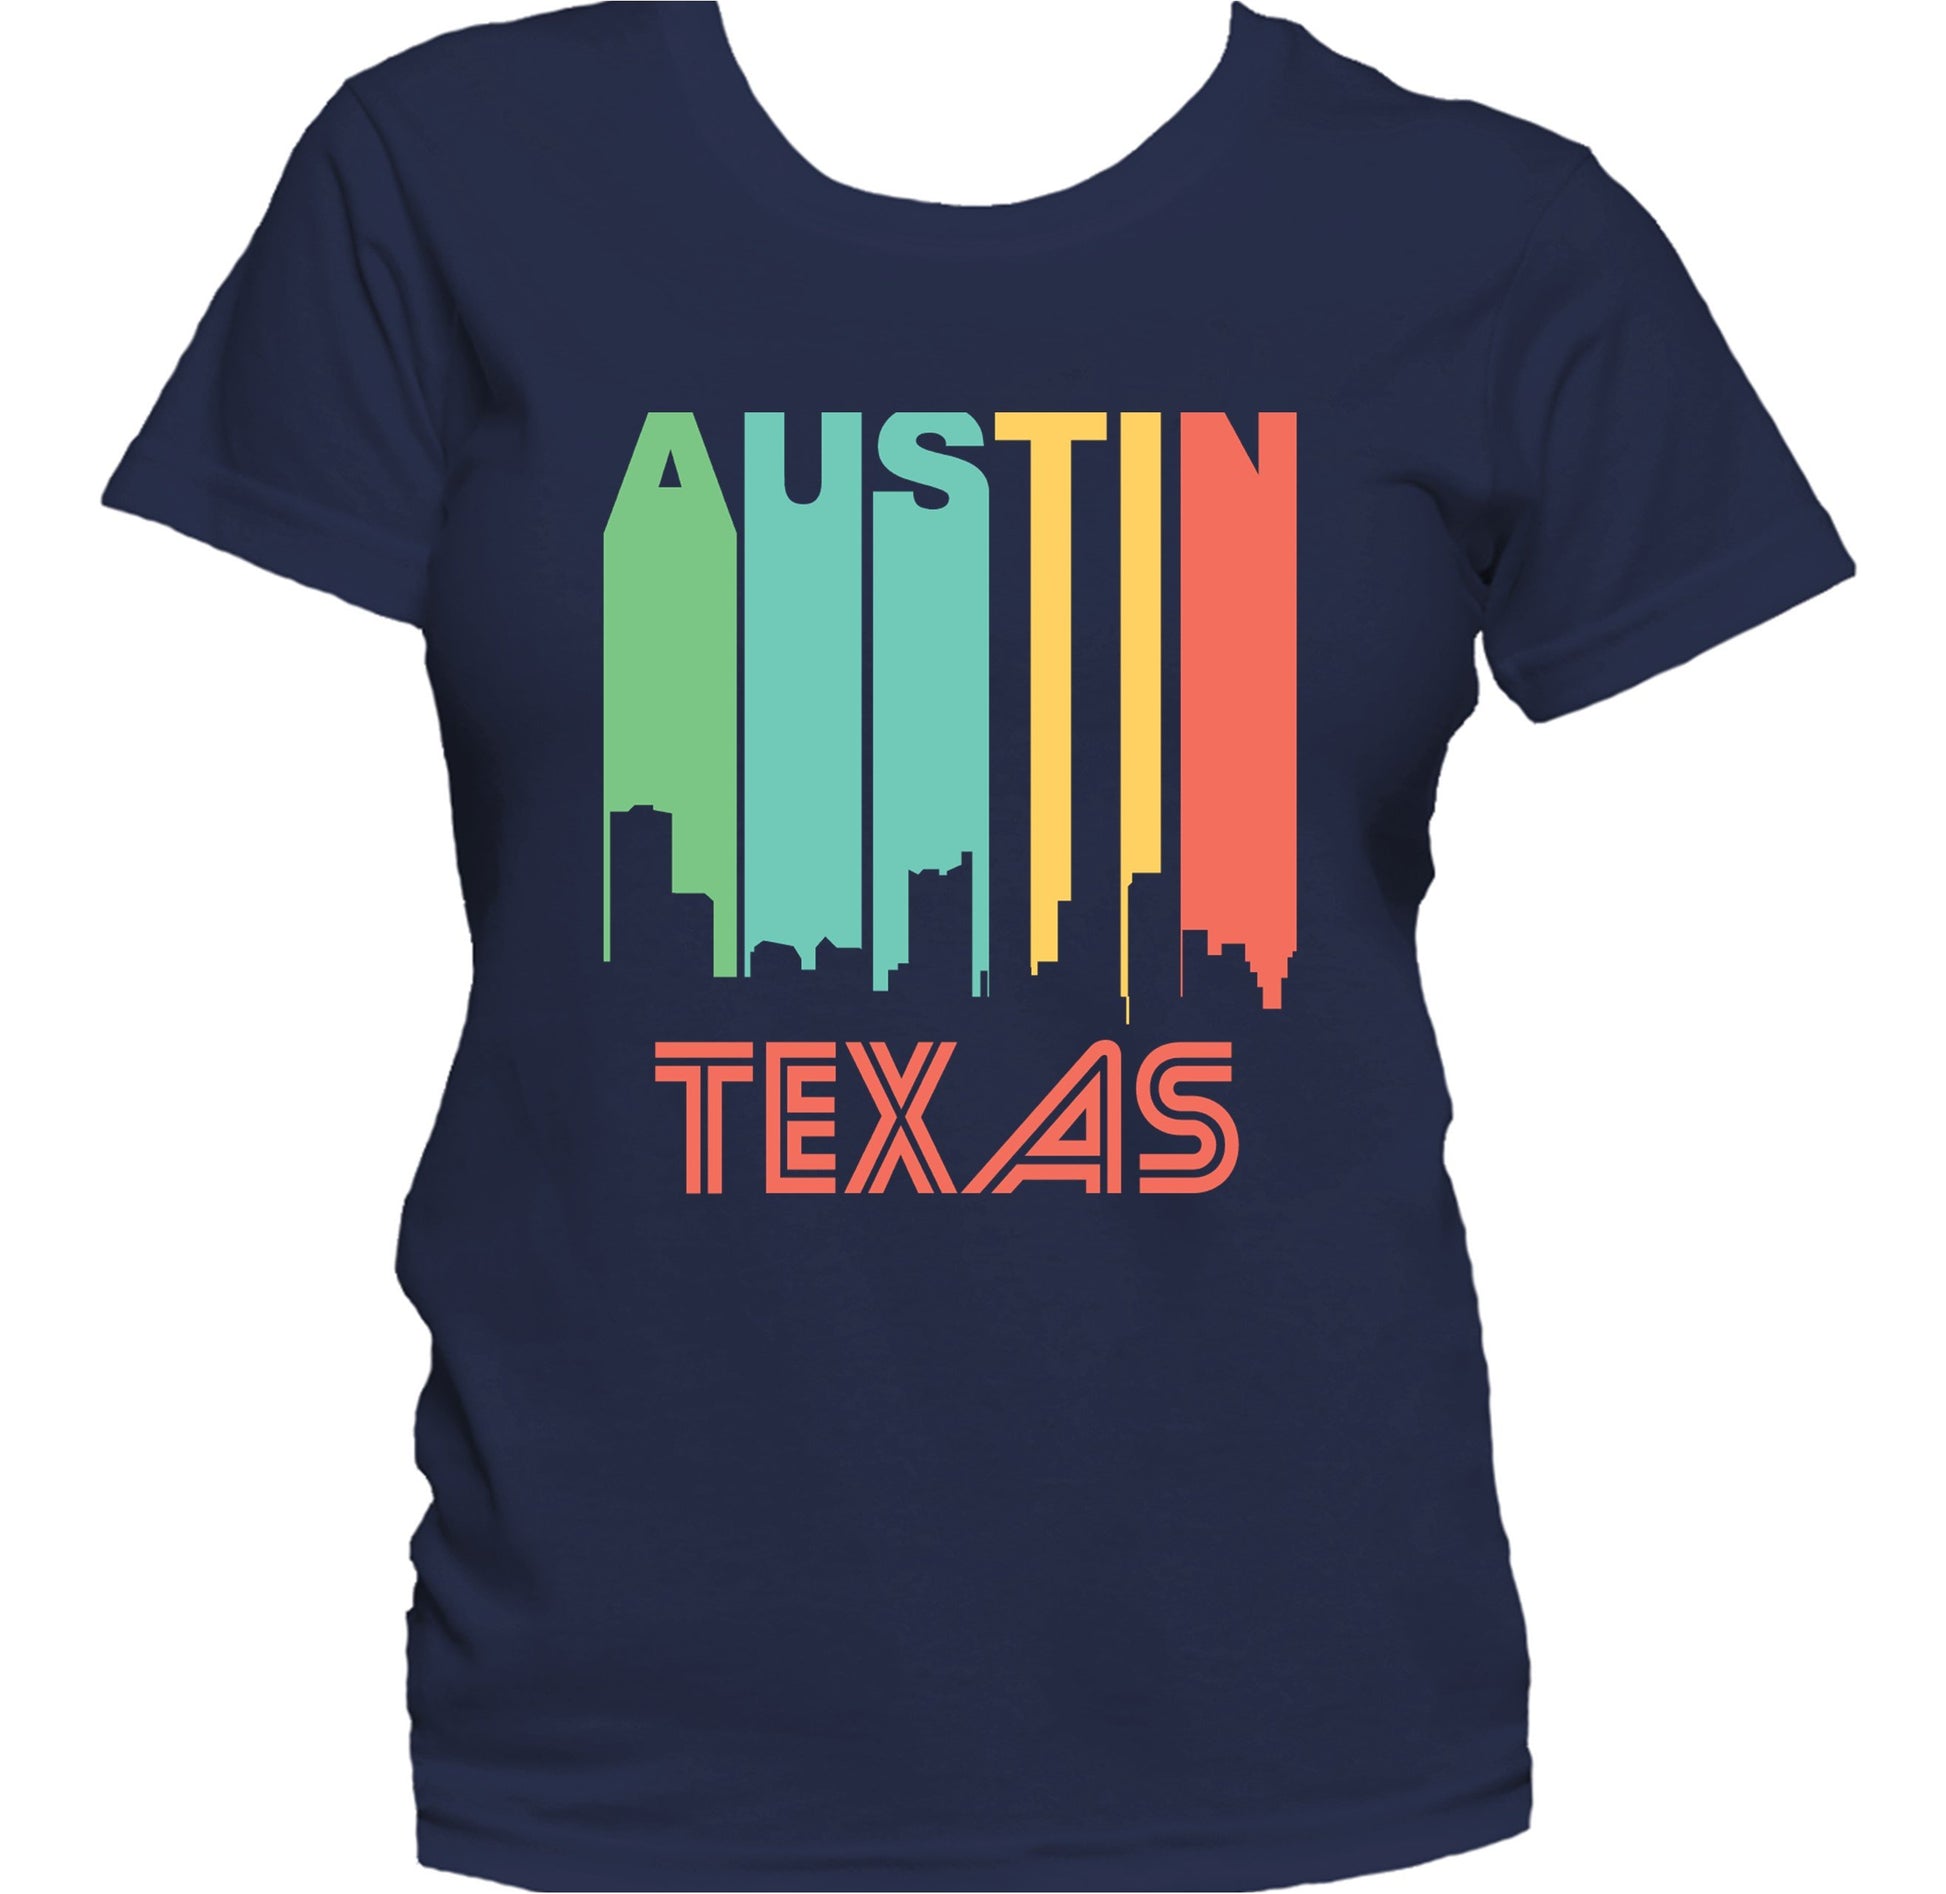 Retro 1970's Style Austin Texas Skyline Women's T-Shirt